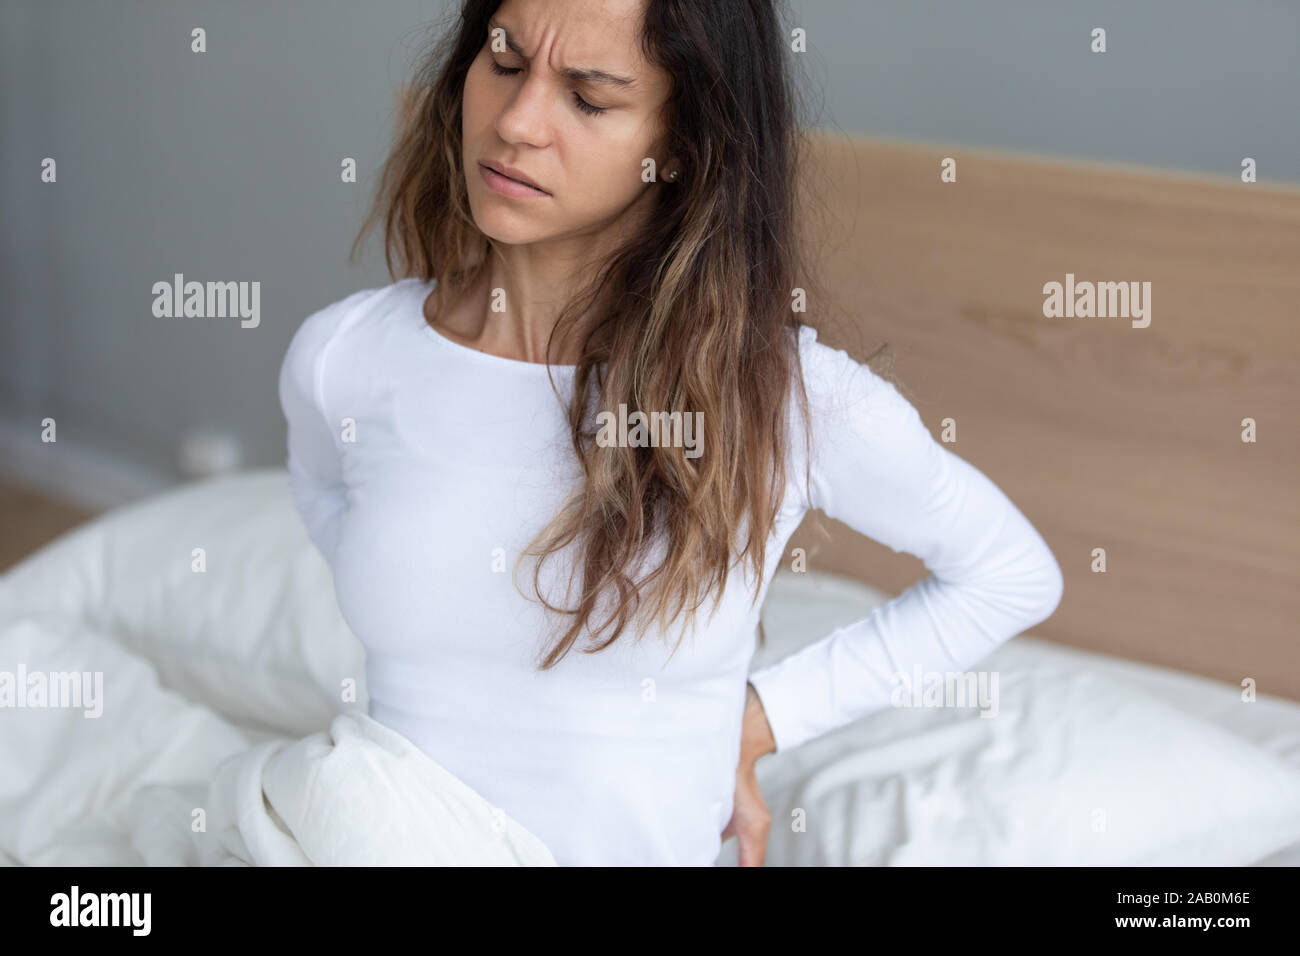 Young woman awakening feeling lower back pain Stock Photo